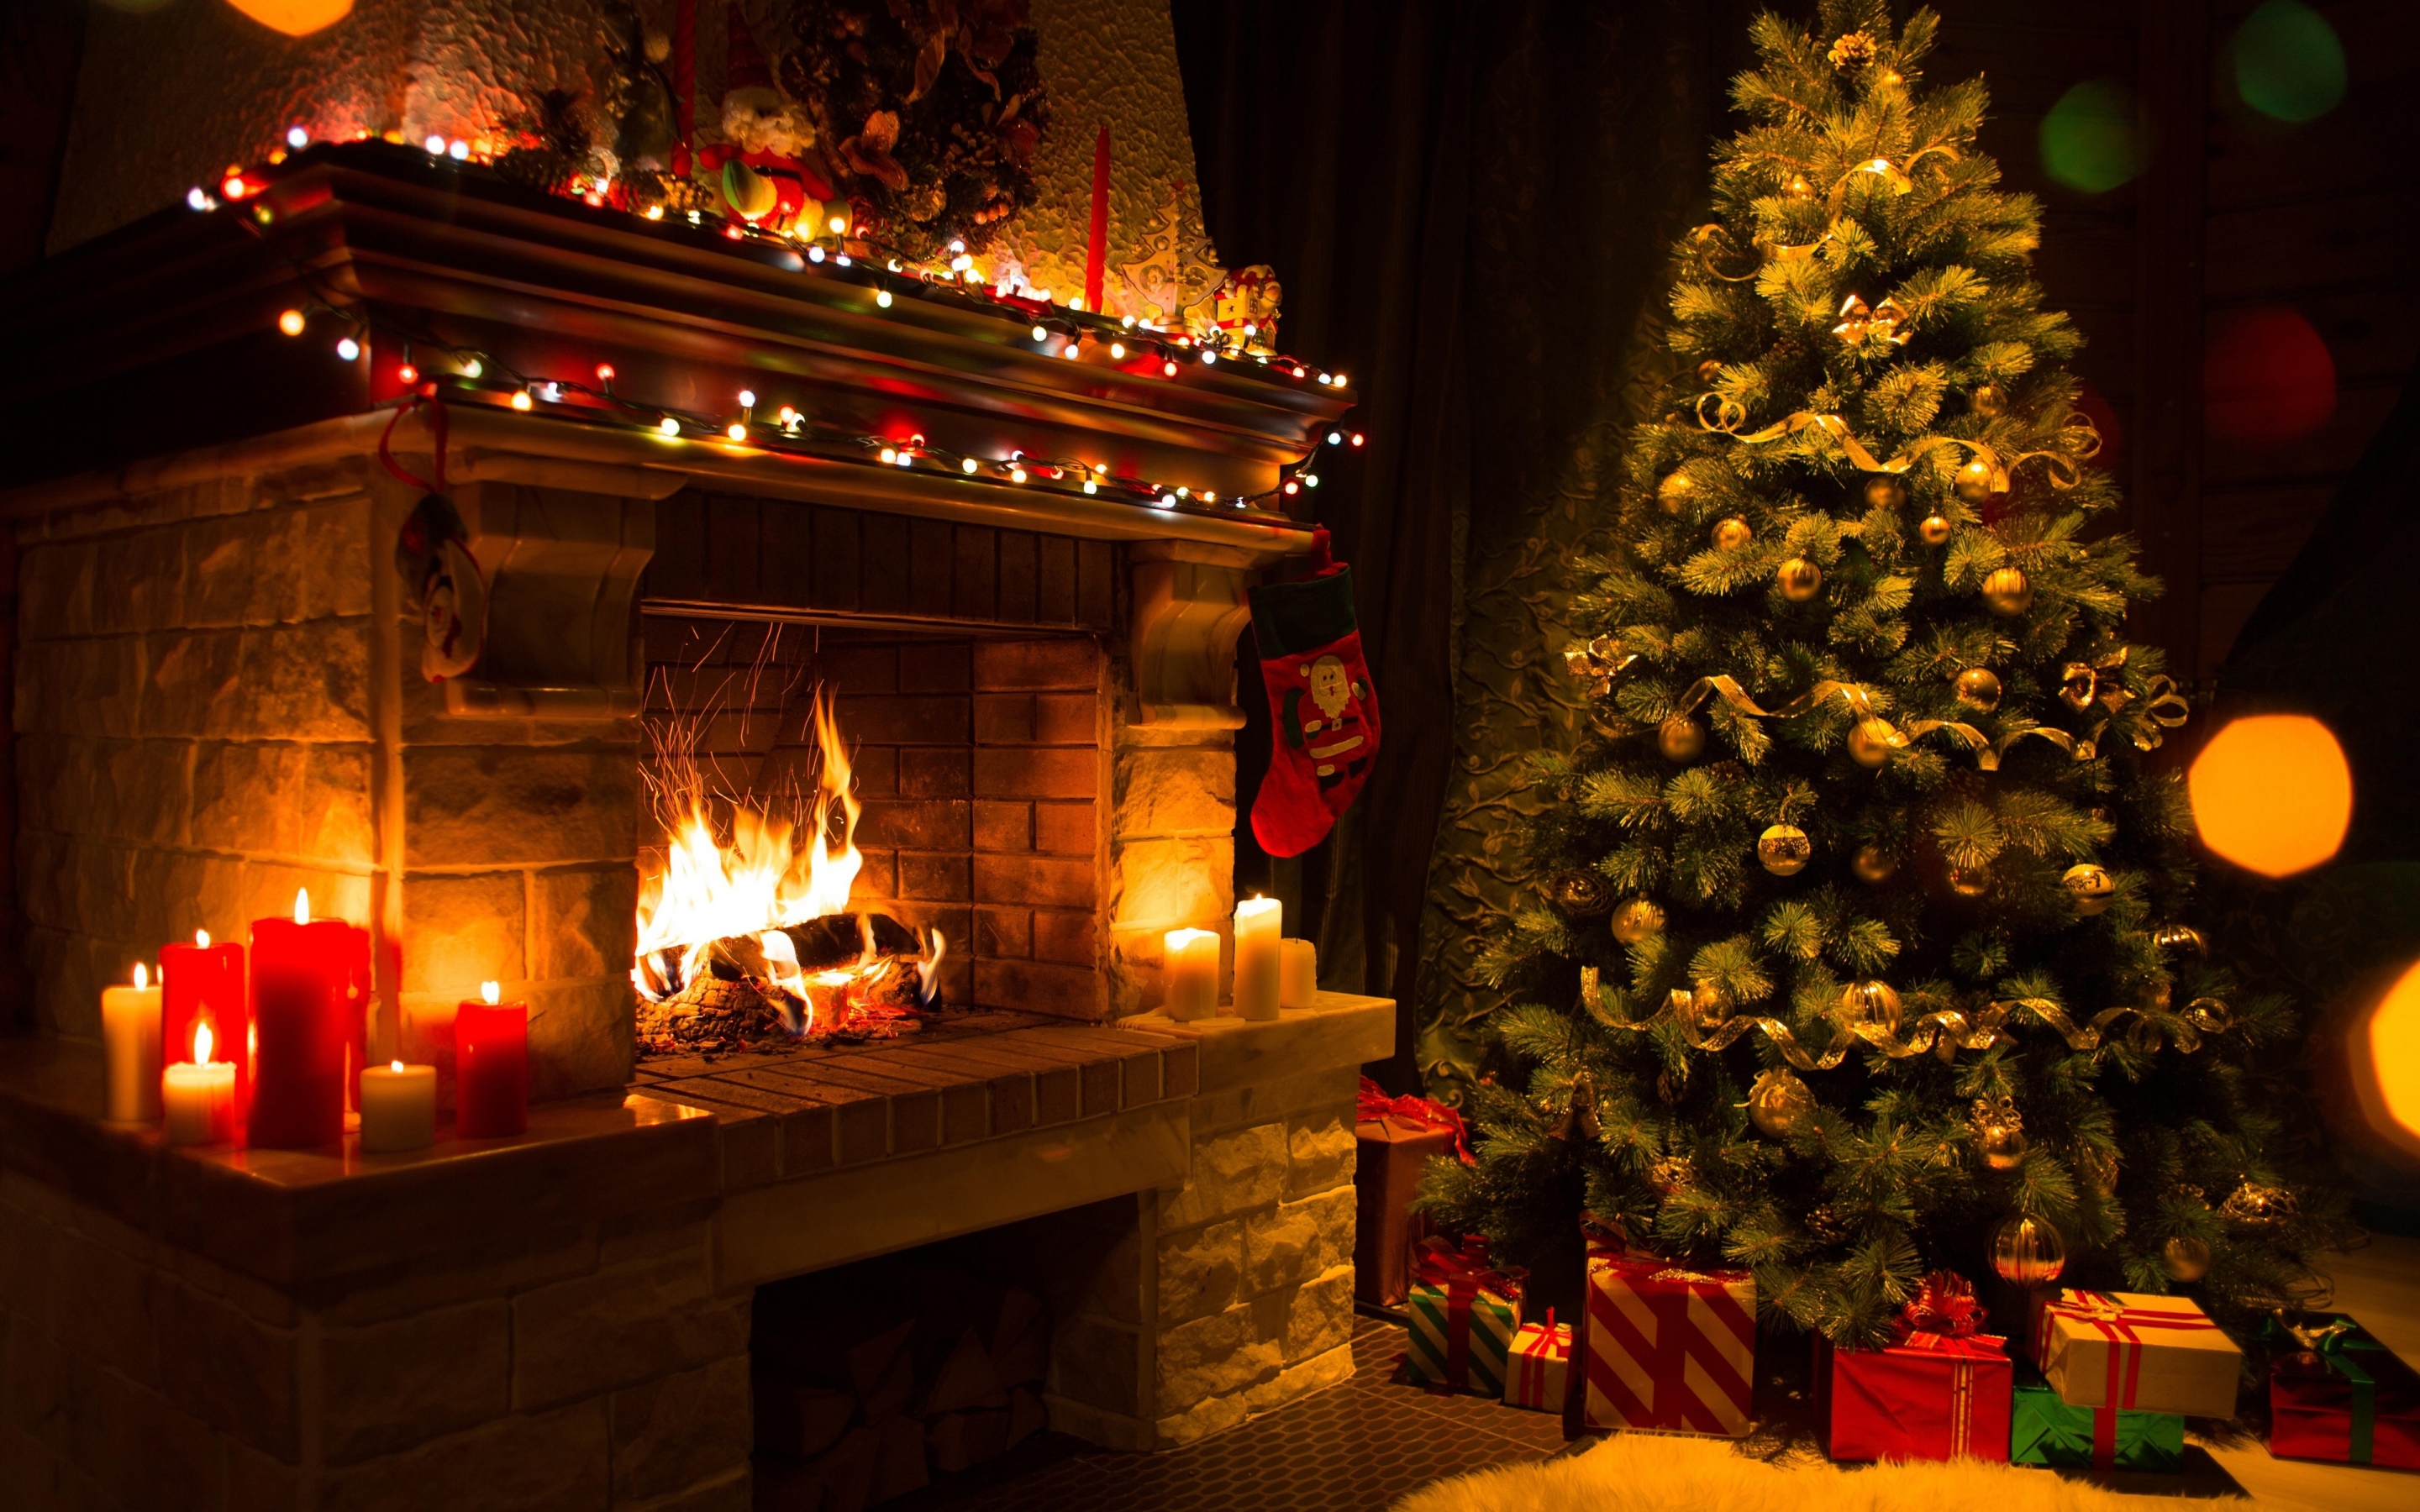 Christmas Home Decorations for 2880 x 1800 Retina Display resolution